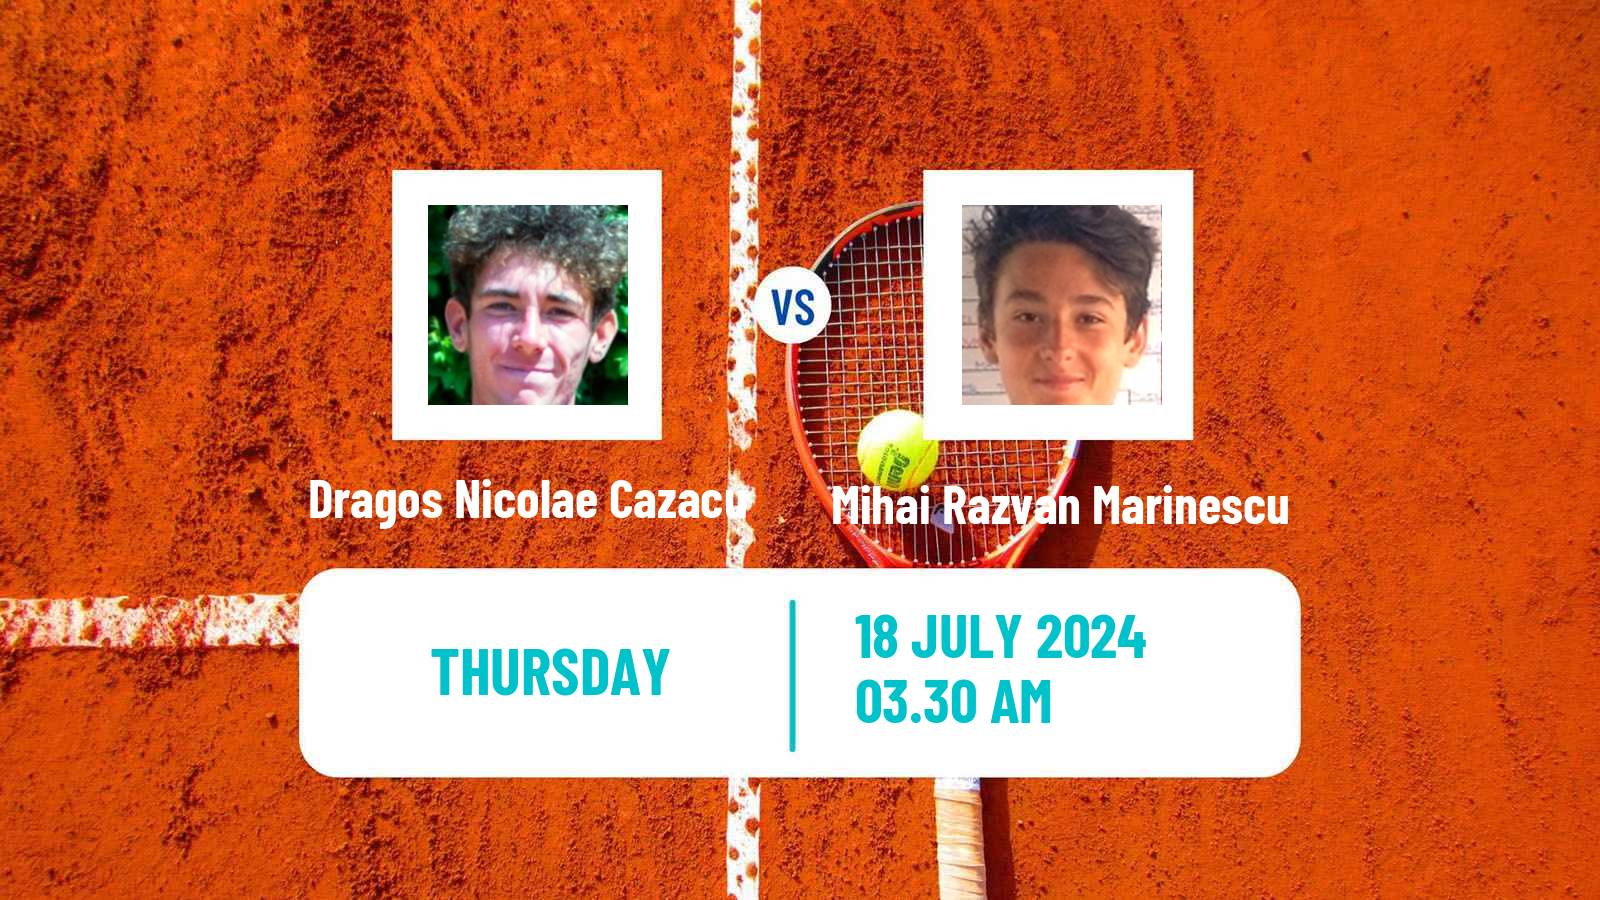 Tennis ITF M15 Bucharest 4 Men Dragos Nicolae Cazacu - Mihai Razvan Marinescu